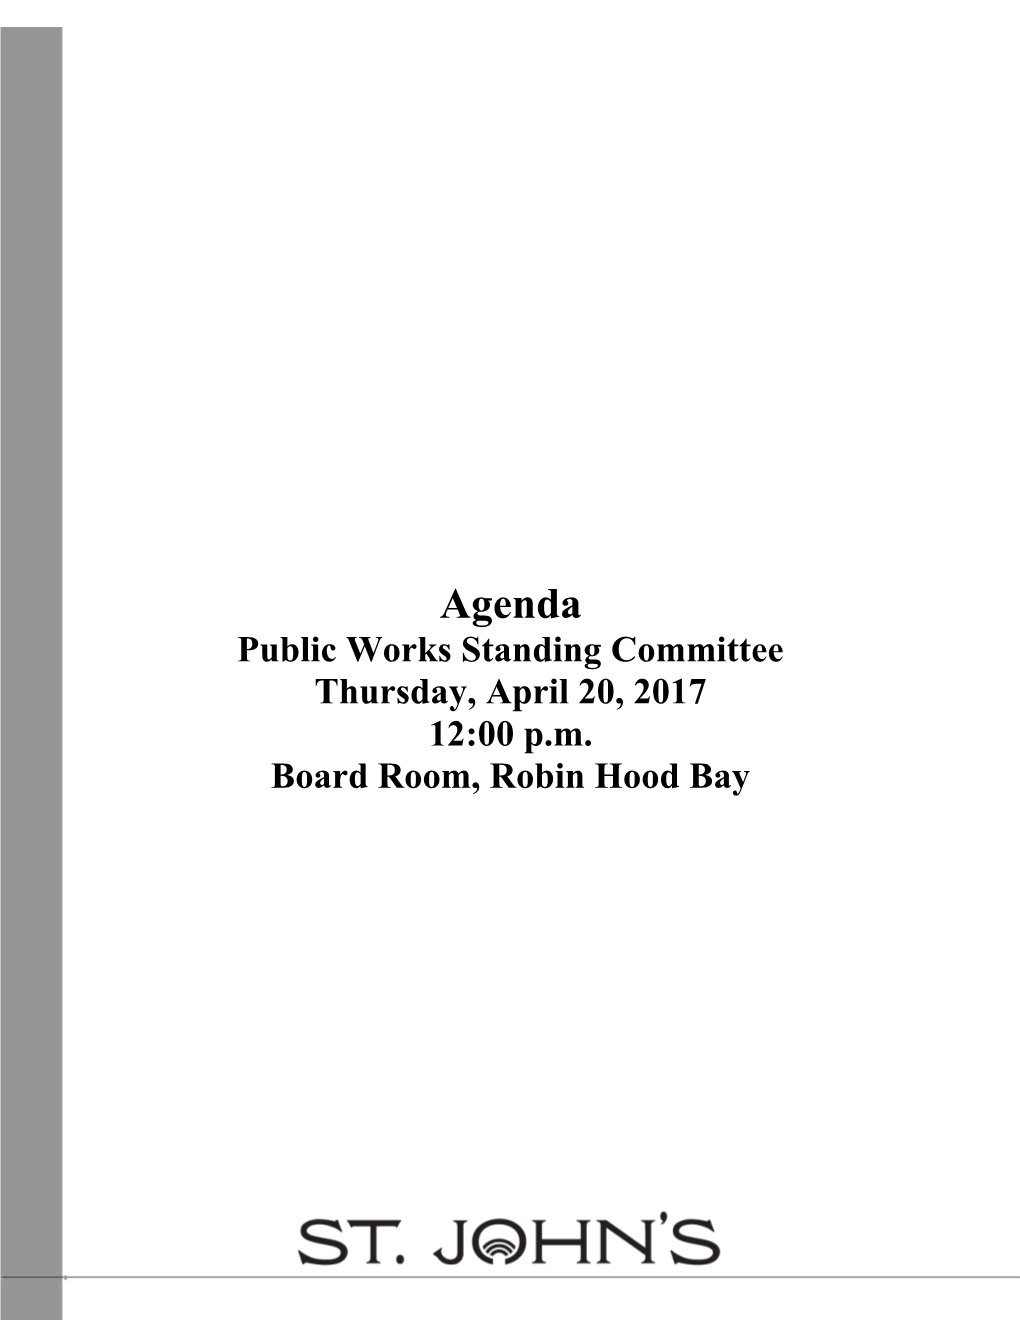 Agenda Public Works Standing Committee Thursday, April 20, 2017 12:00 P.M